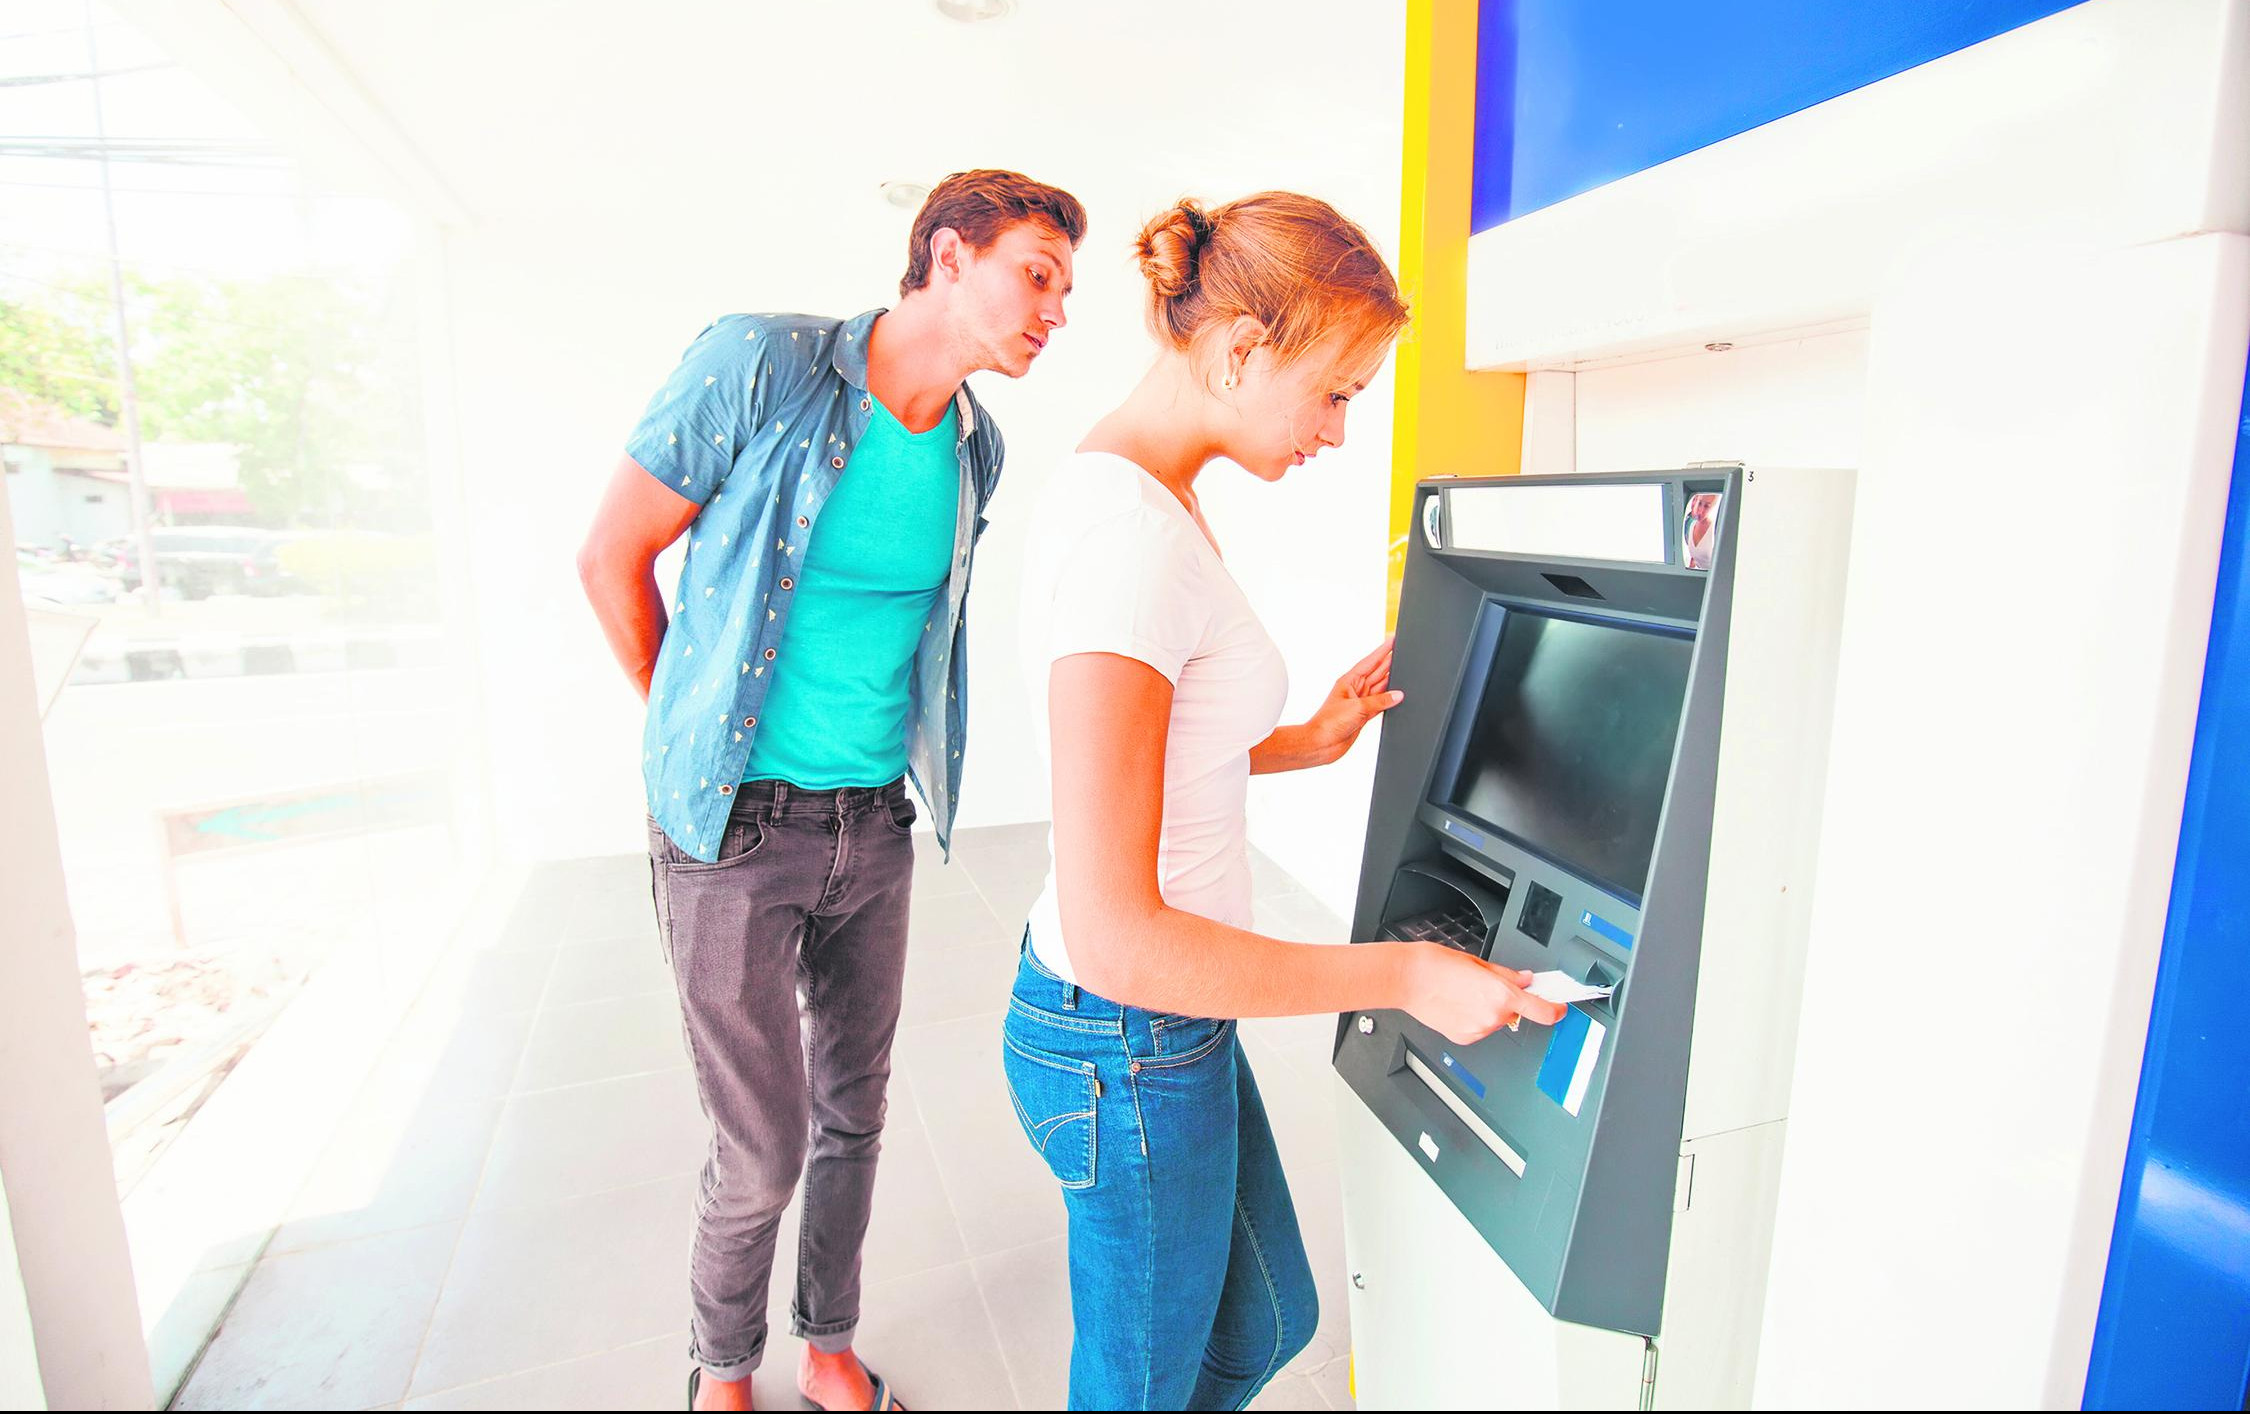 (VIDEO) POHAPŠENA BUGARSKA BANDA! Evo kako su preko bankomata krali novac Beograđana!